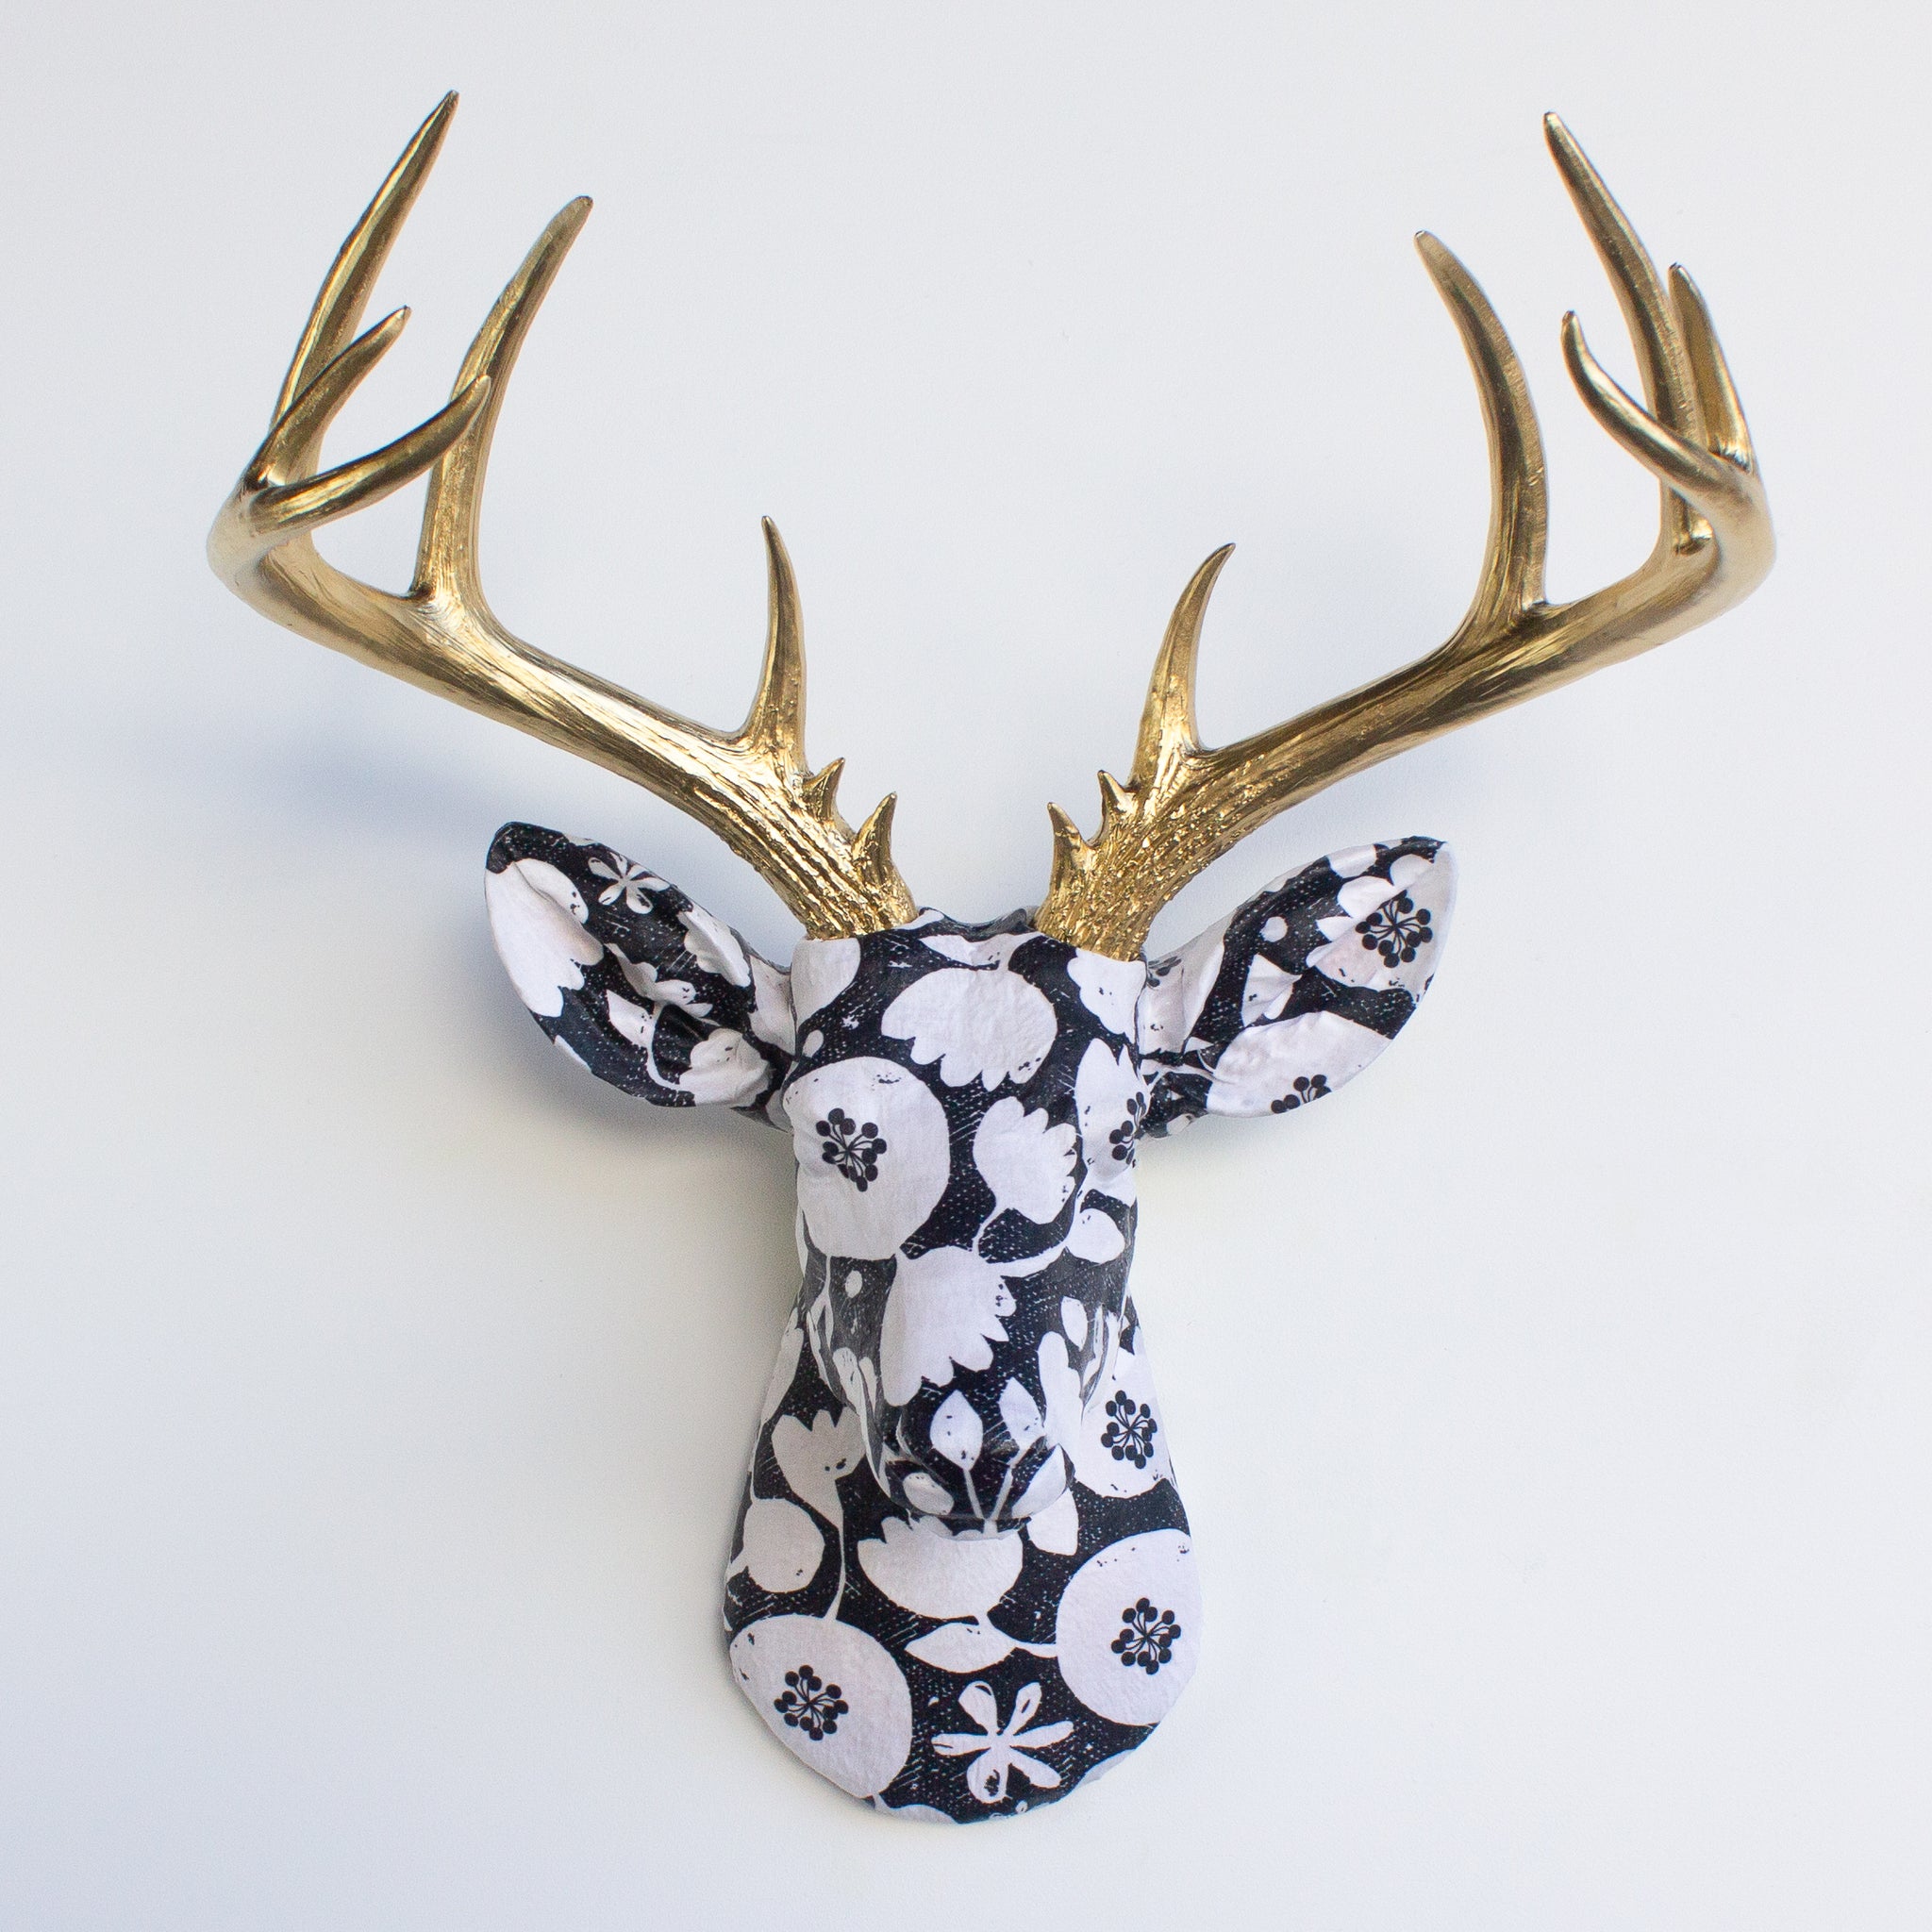 Fabric Deer Head - Black and White Flower Pattern Fabric Deer Head - Gold Antlers- Faux Taxidermy Deer Head Wall Mount